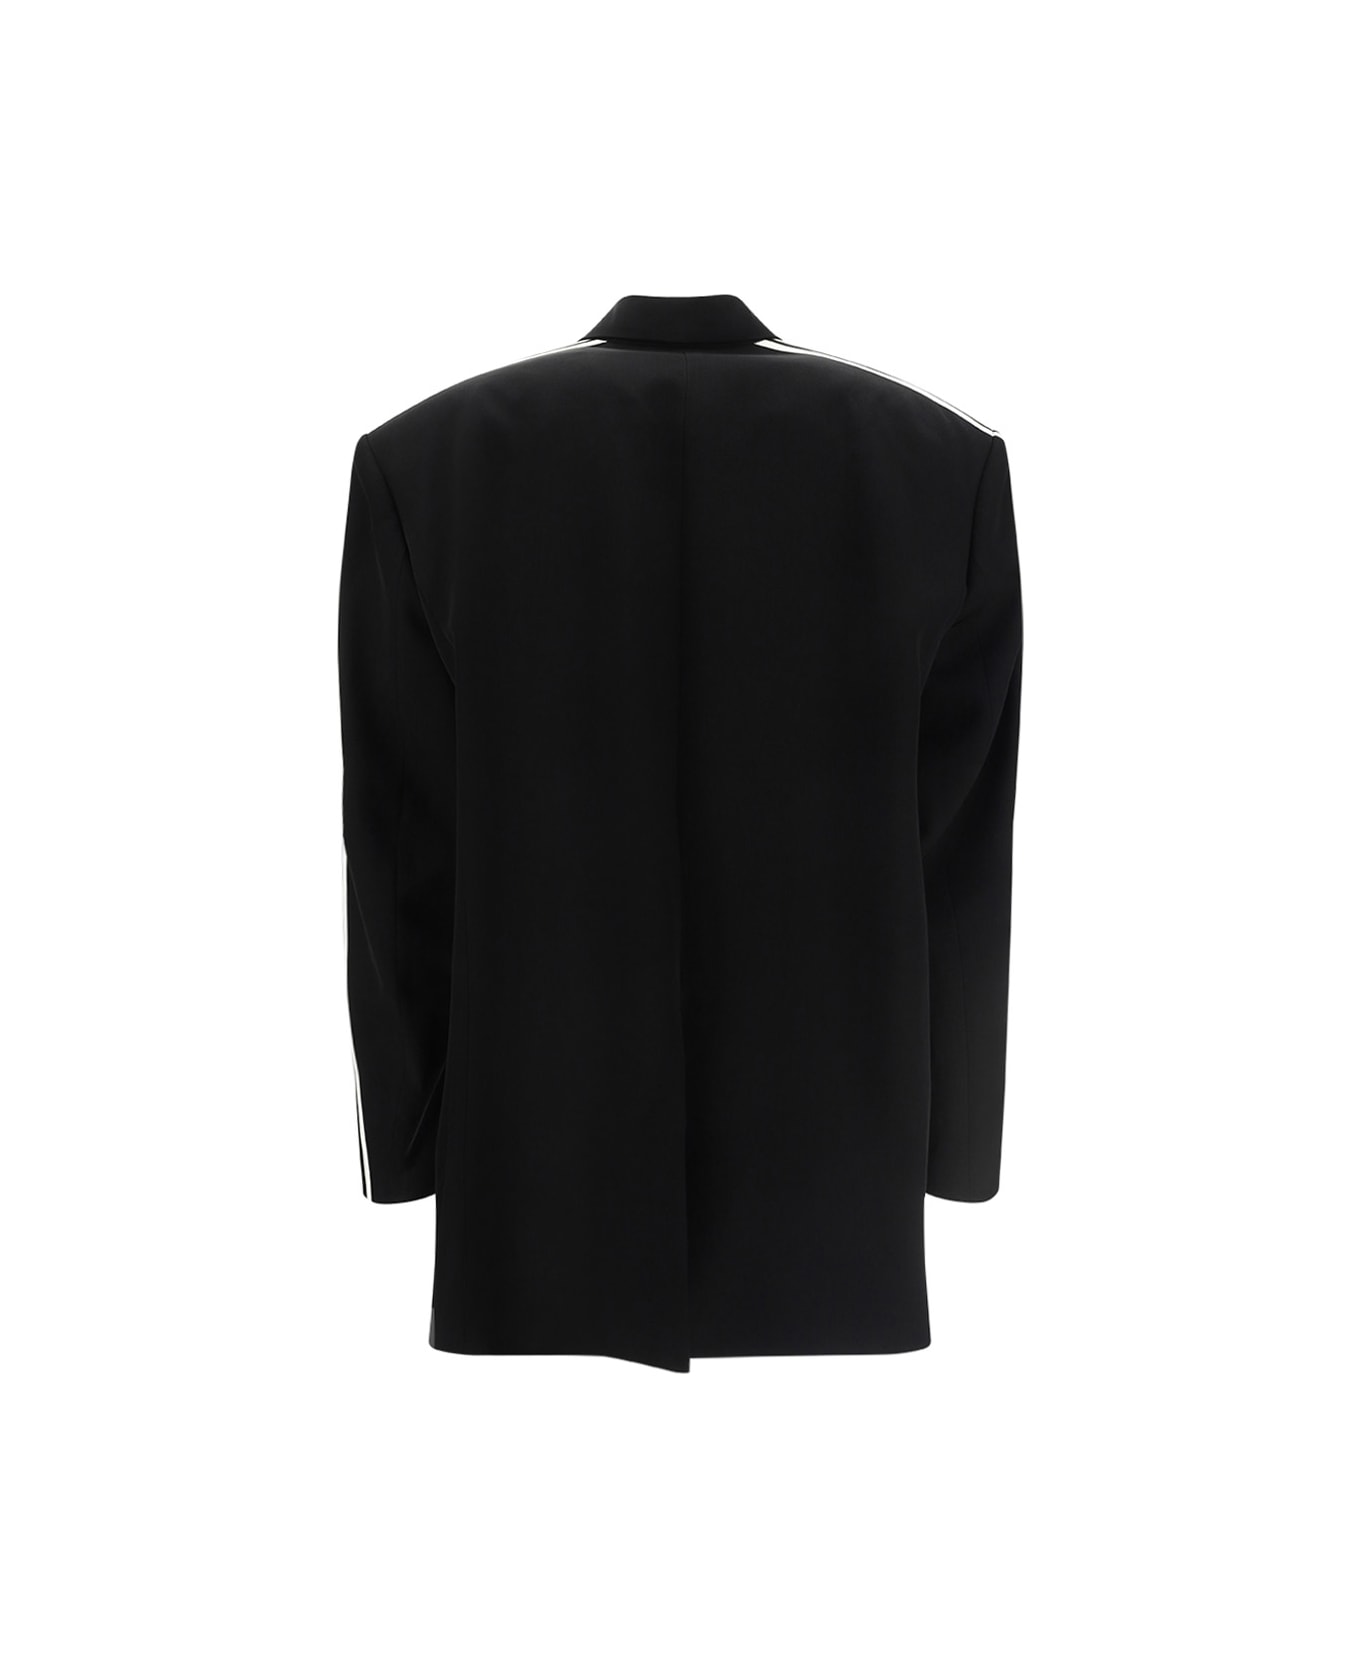 Balenciaga X Adidas canada Blazer Jacket - Black